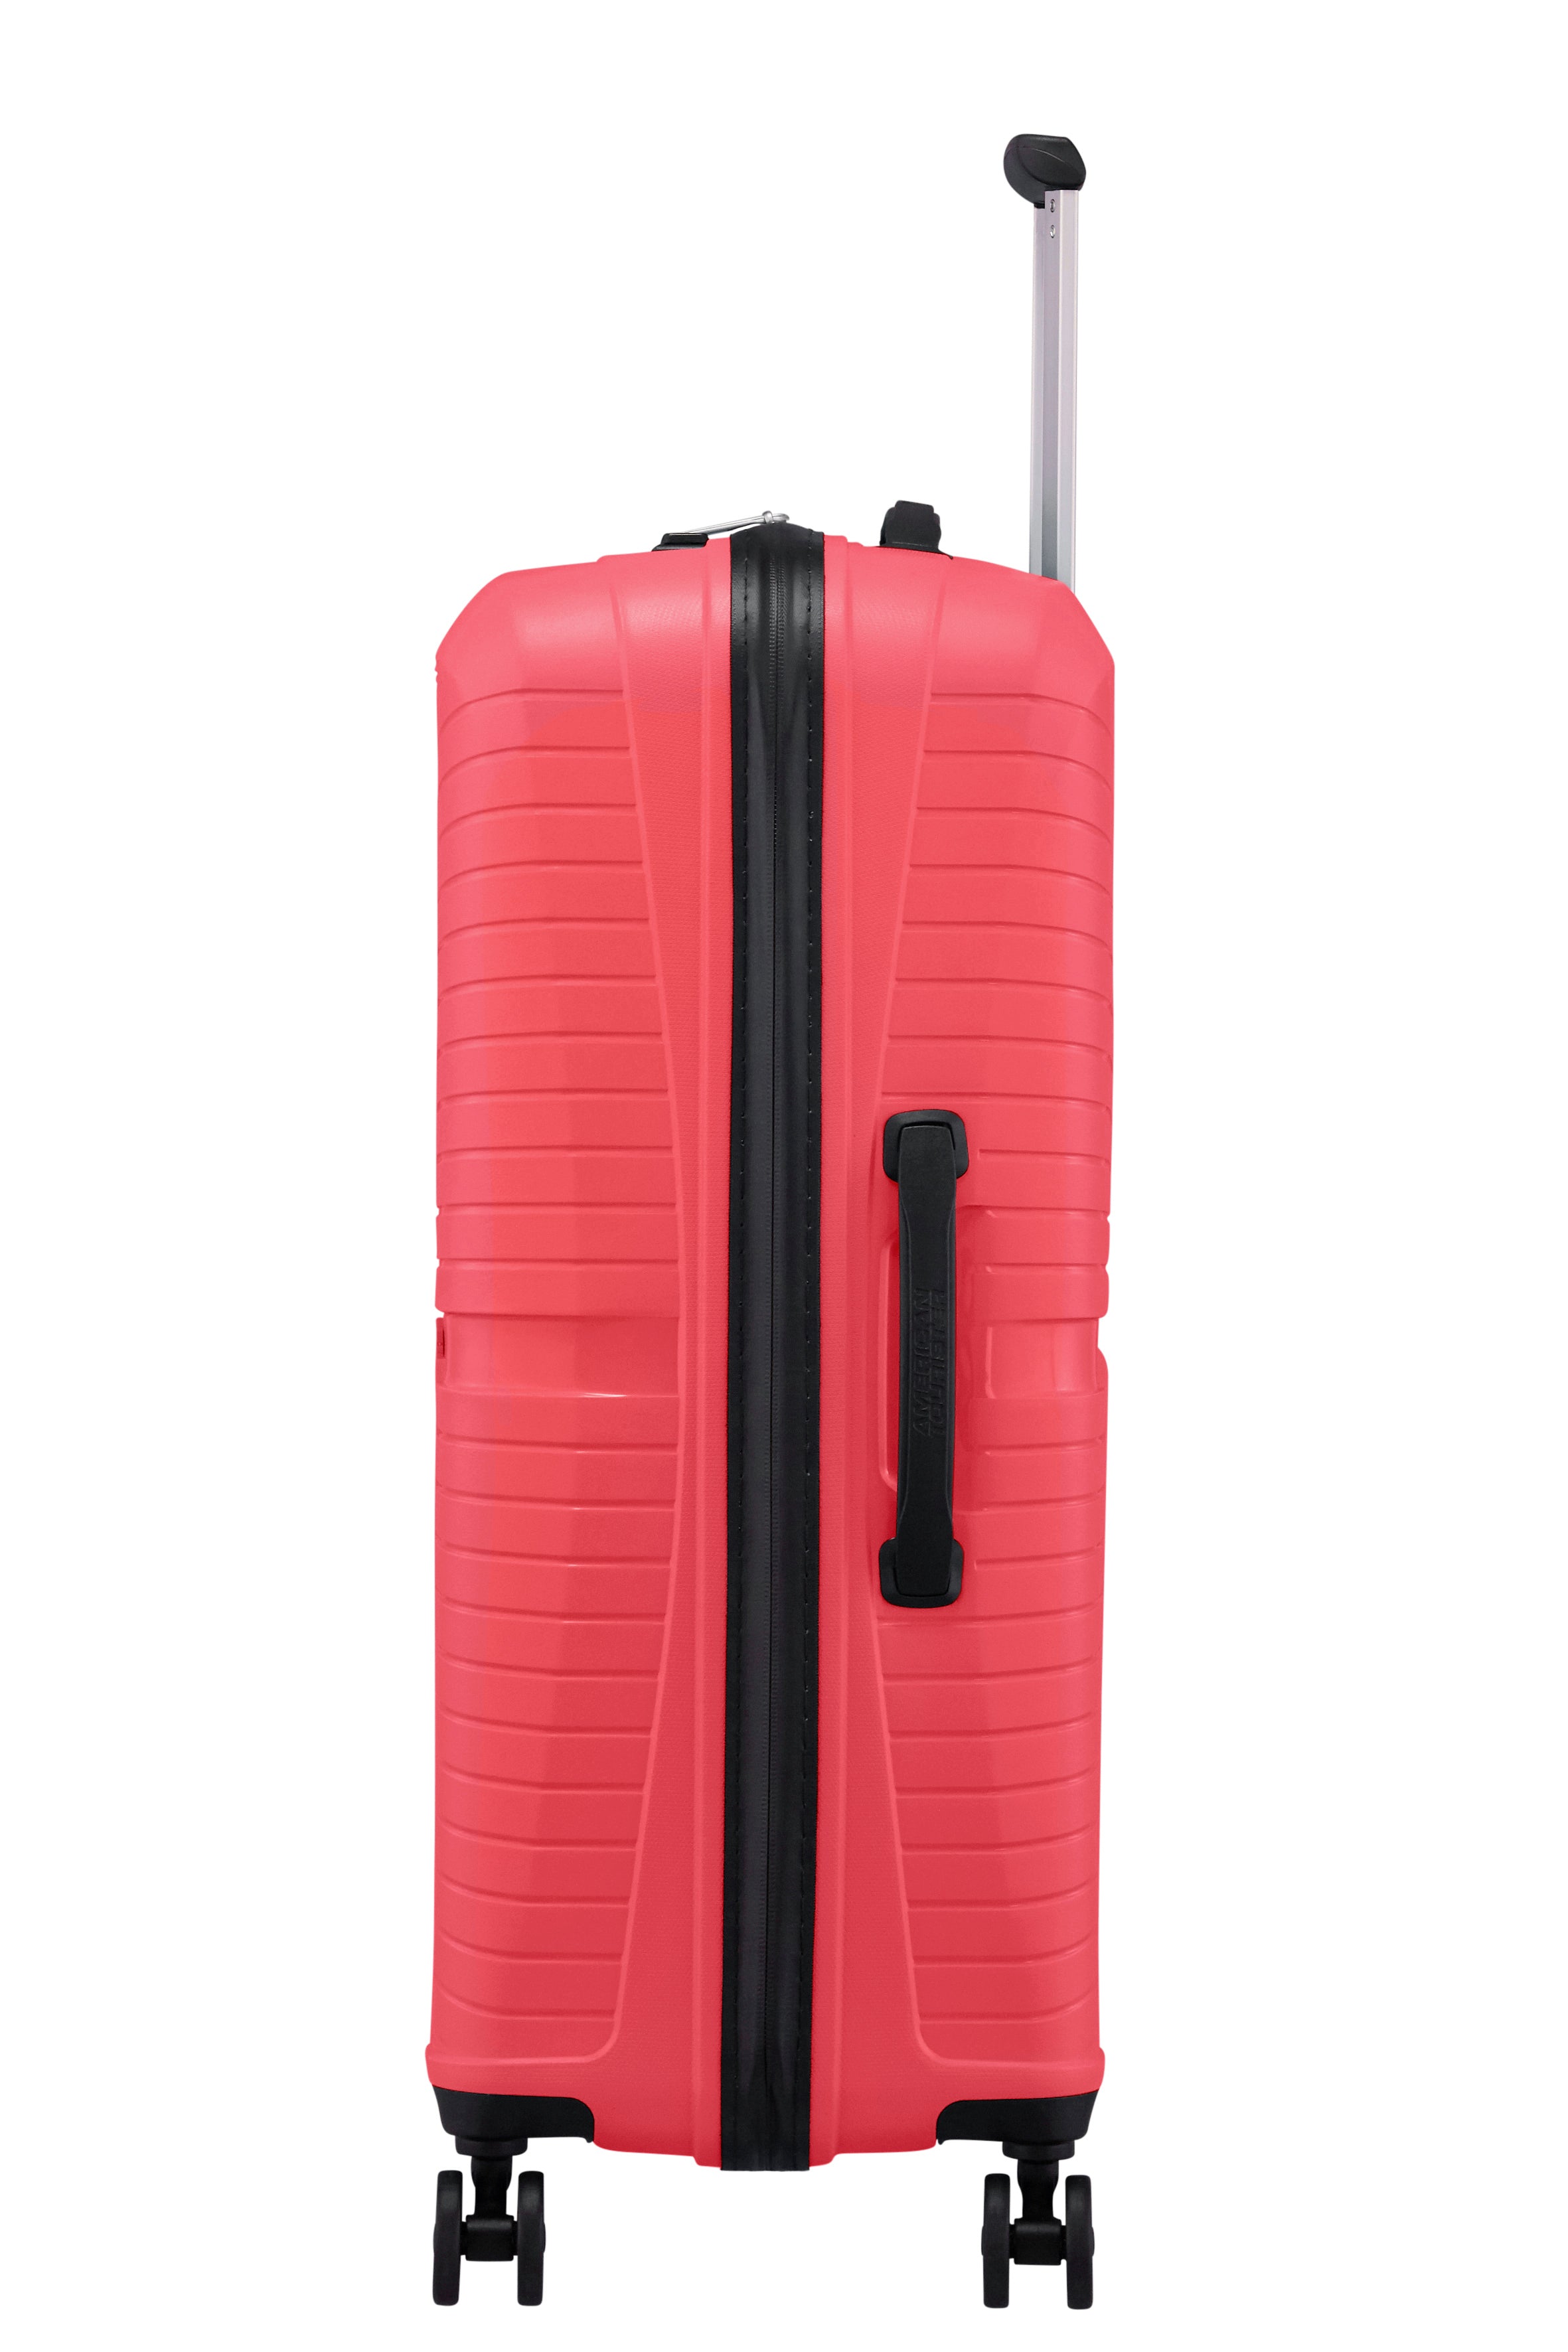 American Tourister - Airconic 67cm Medium 4 Wheel Hard Suitcase - Paradise Pink - 0